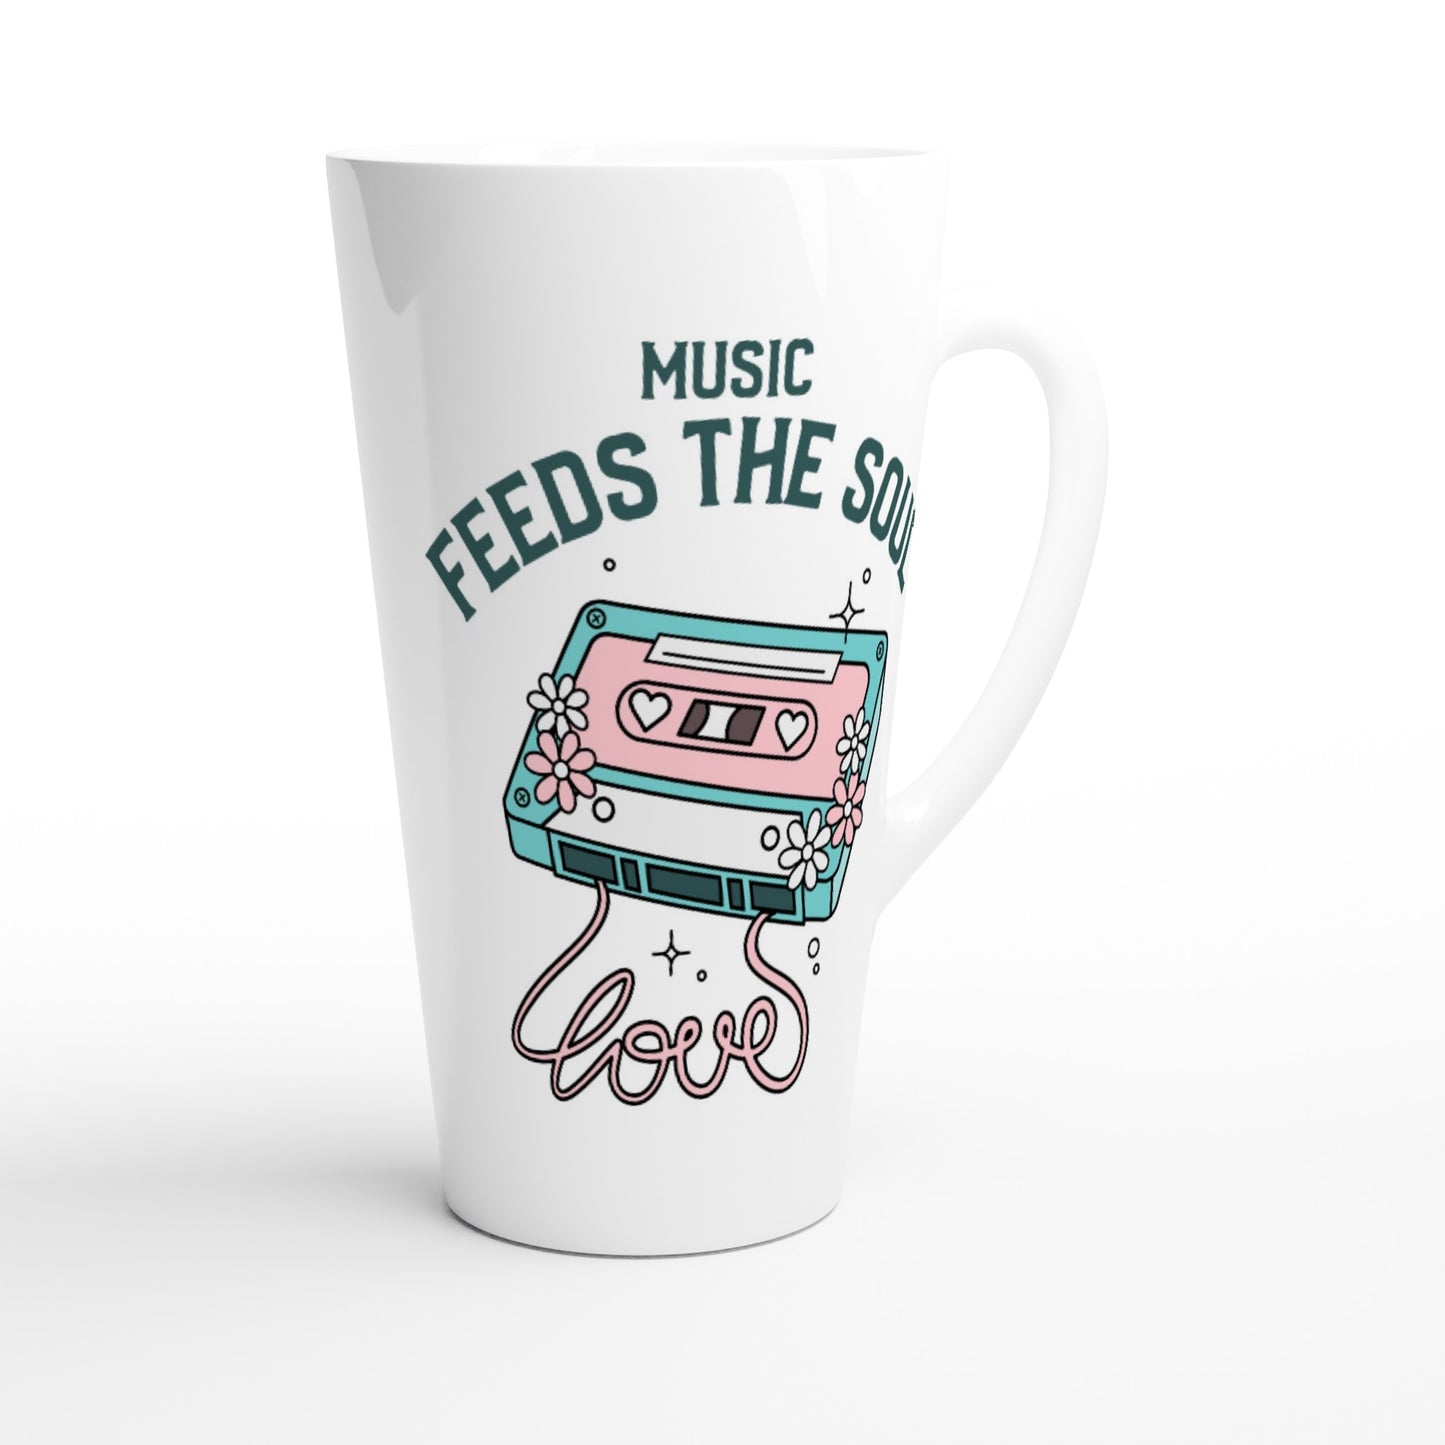 Music Feeds The Soul - White Latte 17oz Ceramic Mug Latte Mug Music Retro